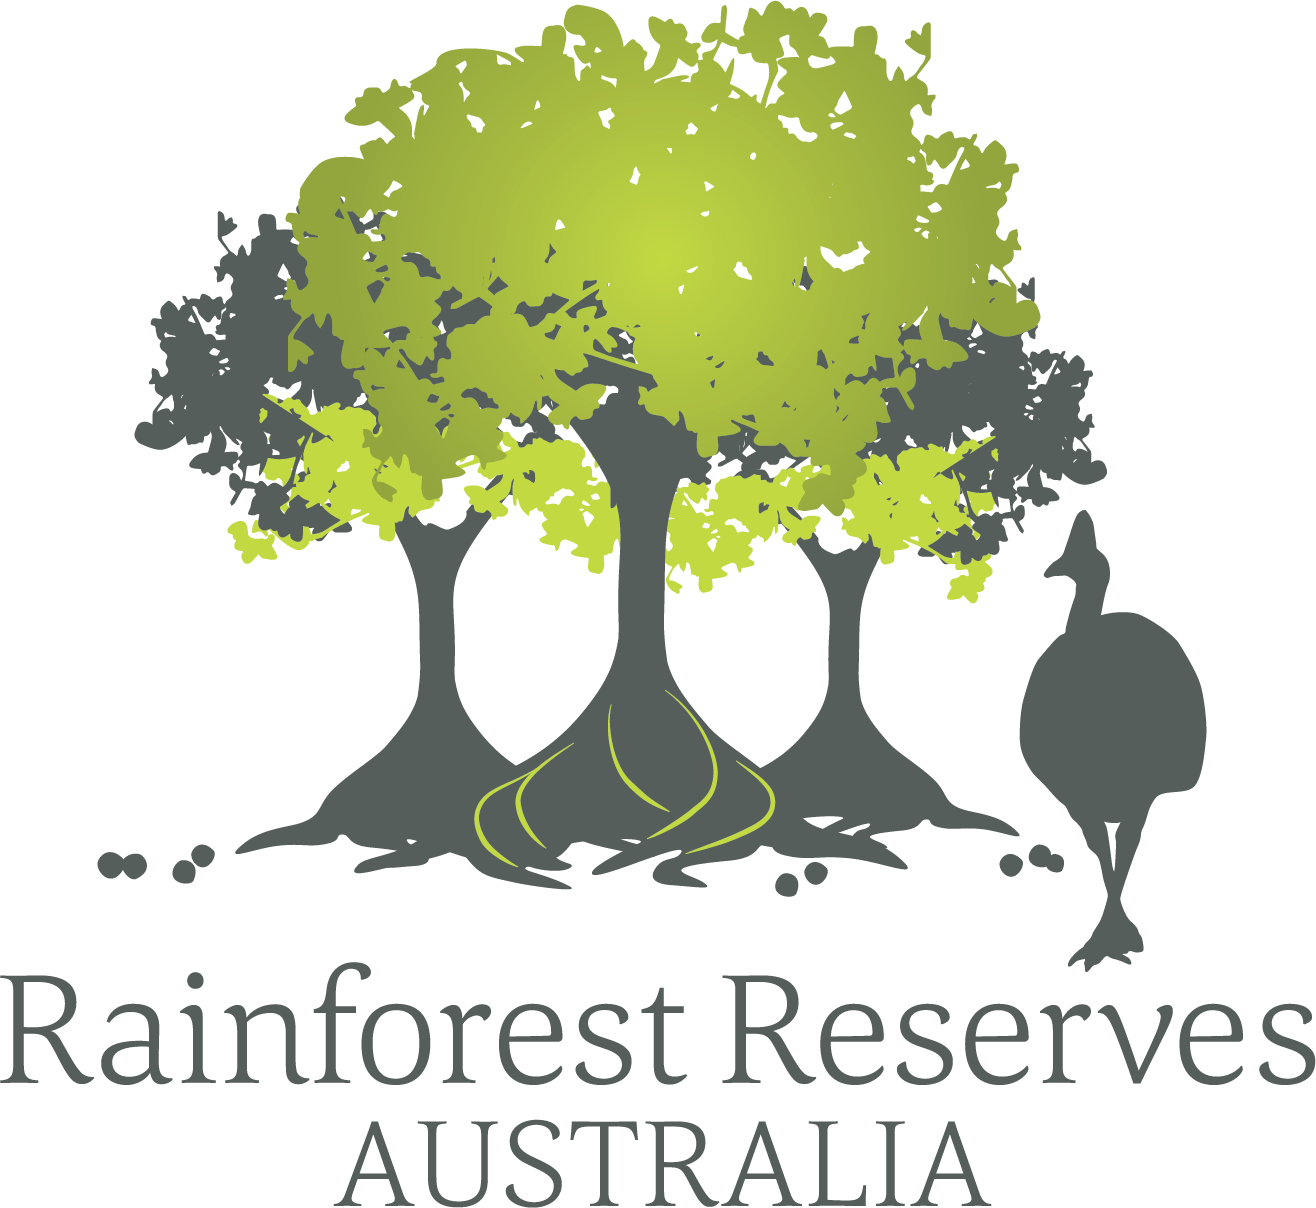 Rainforest Reserves Australia logo